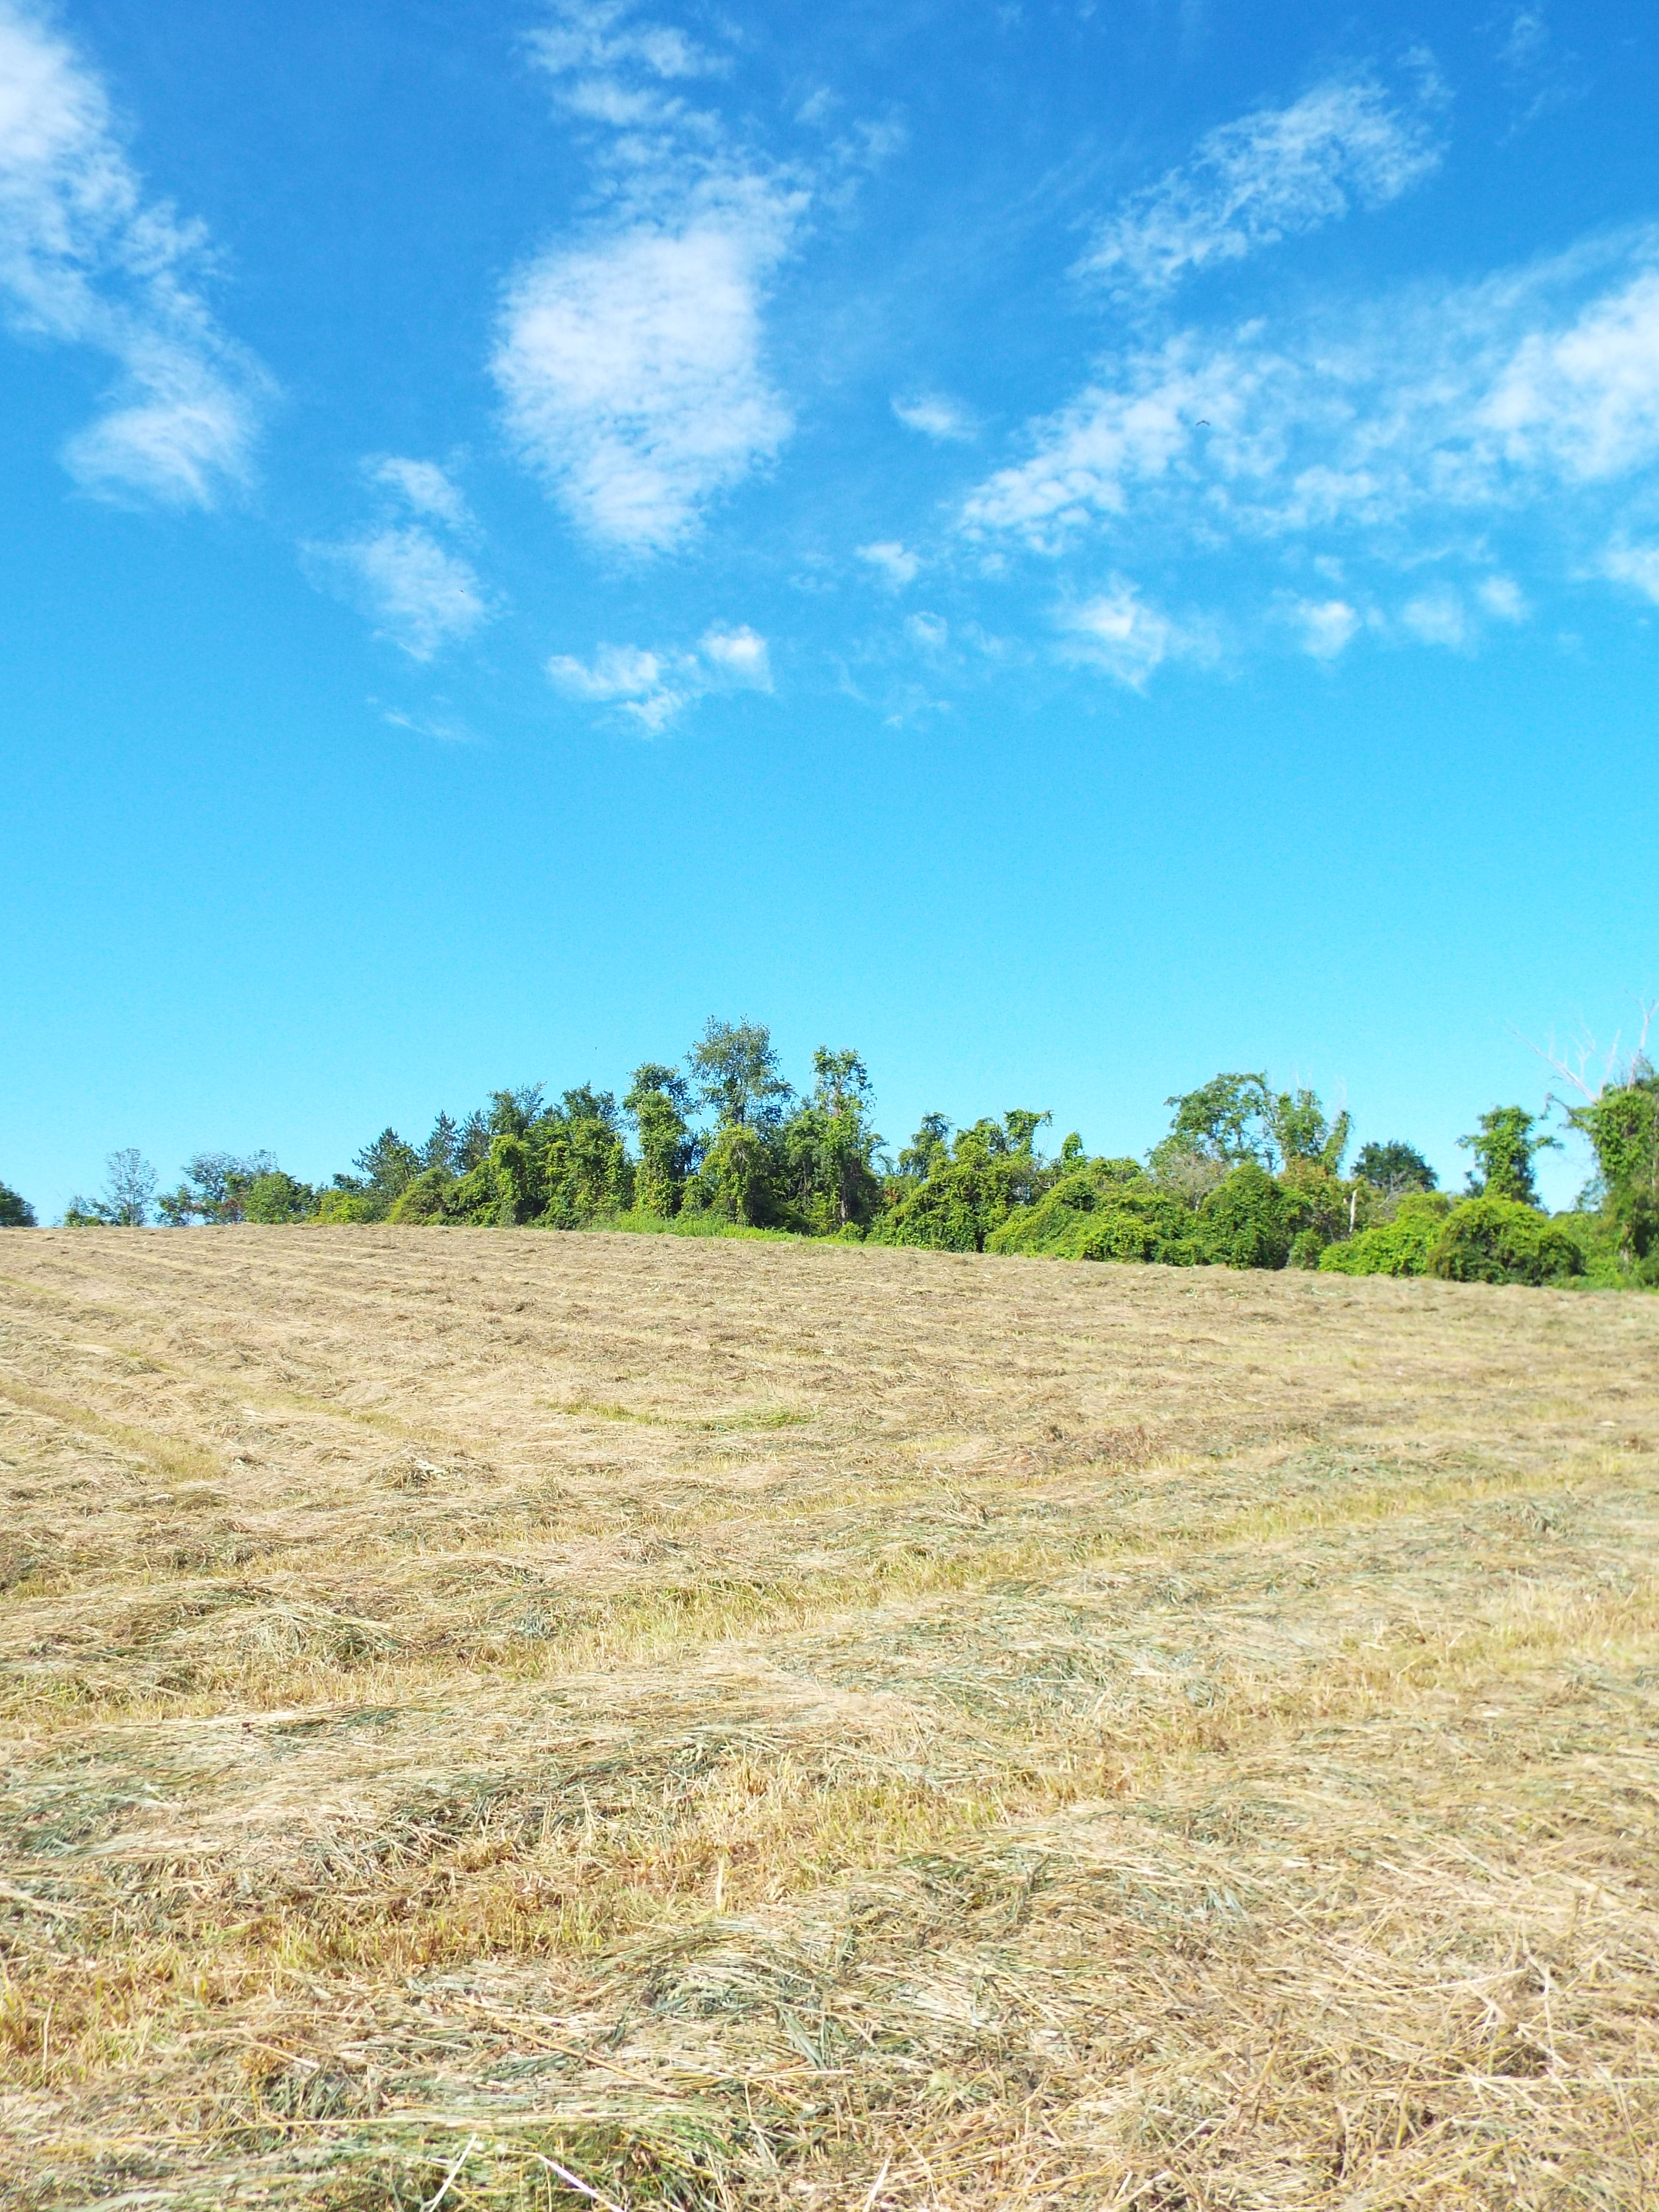  hayed field under gorgeous sky